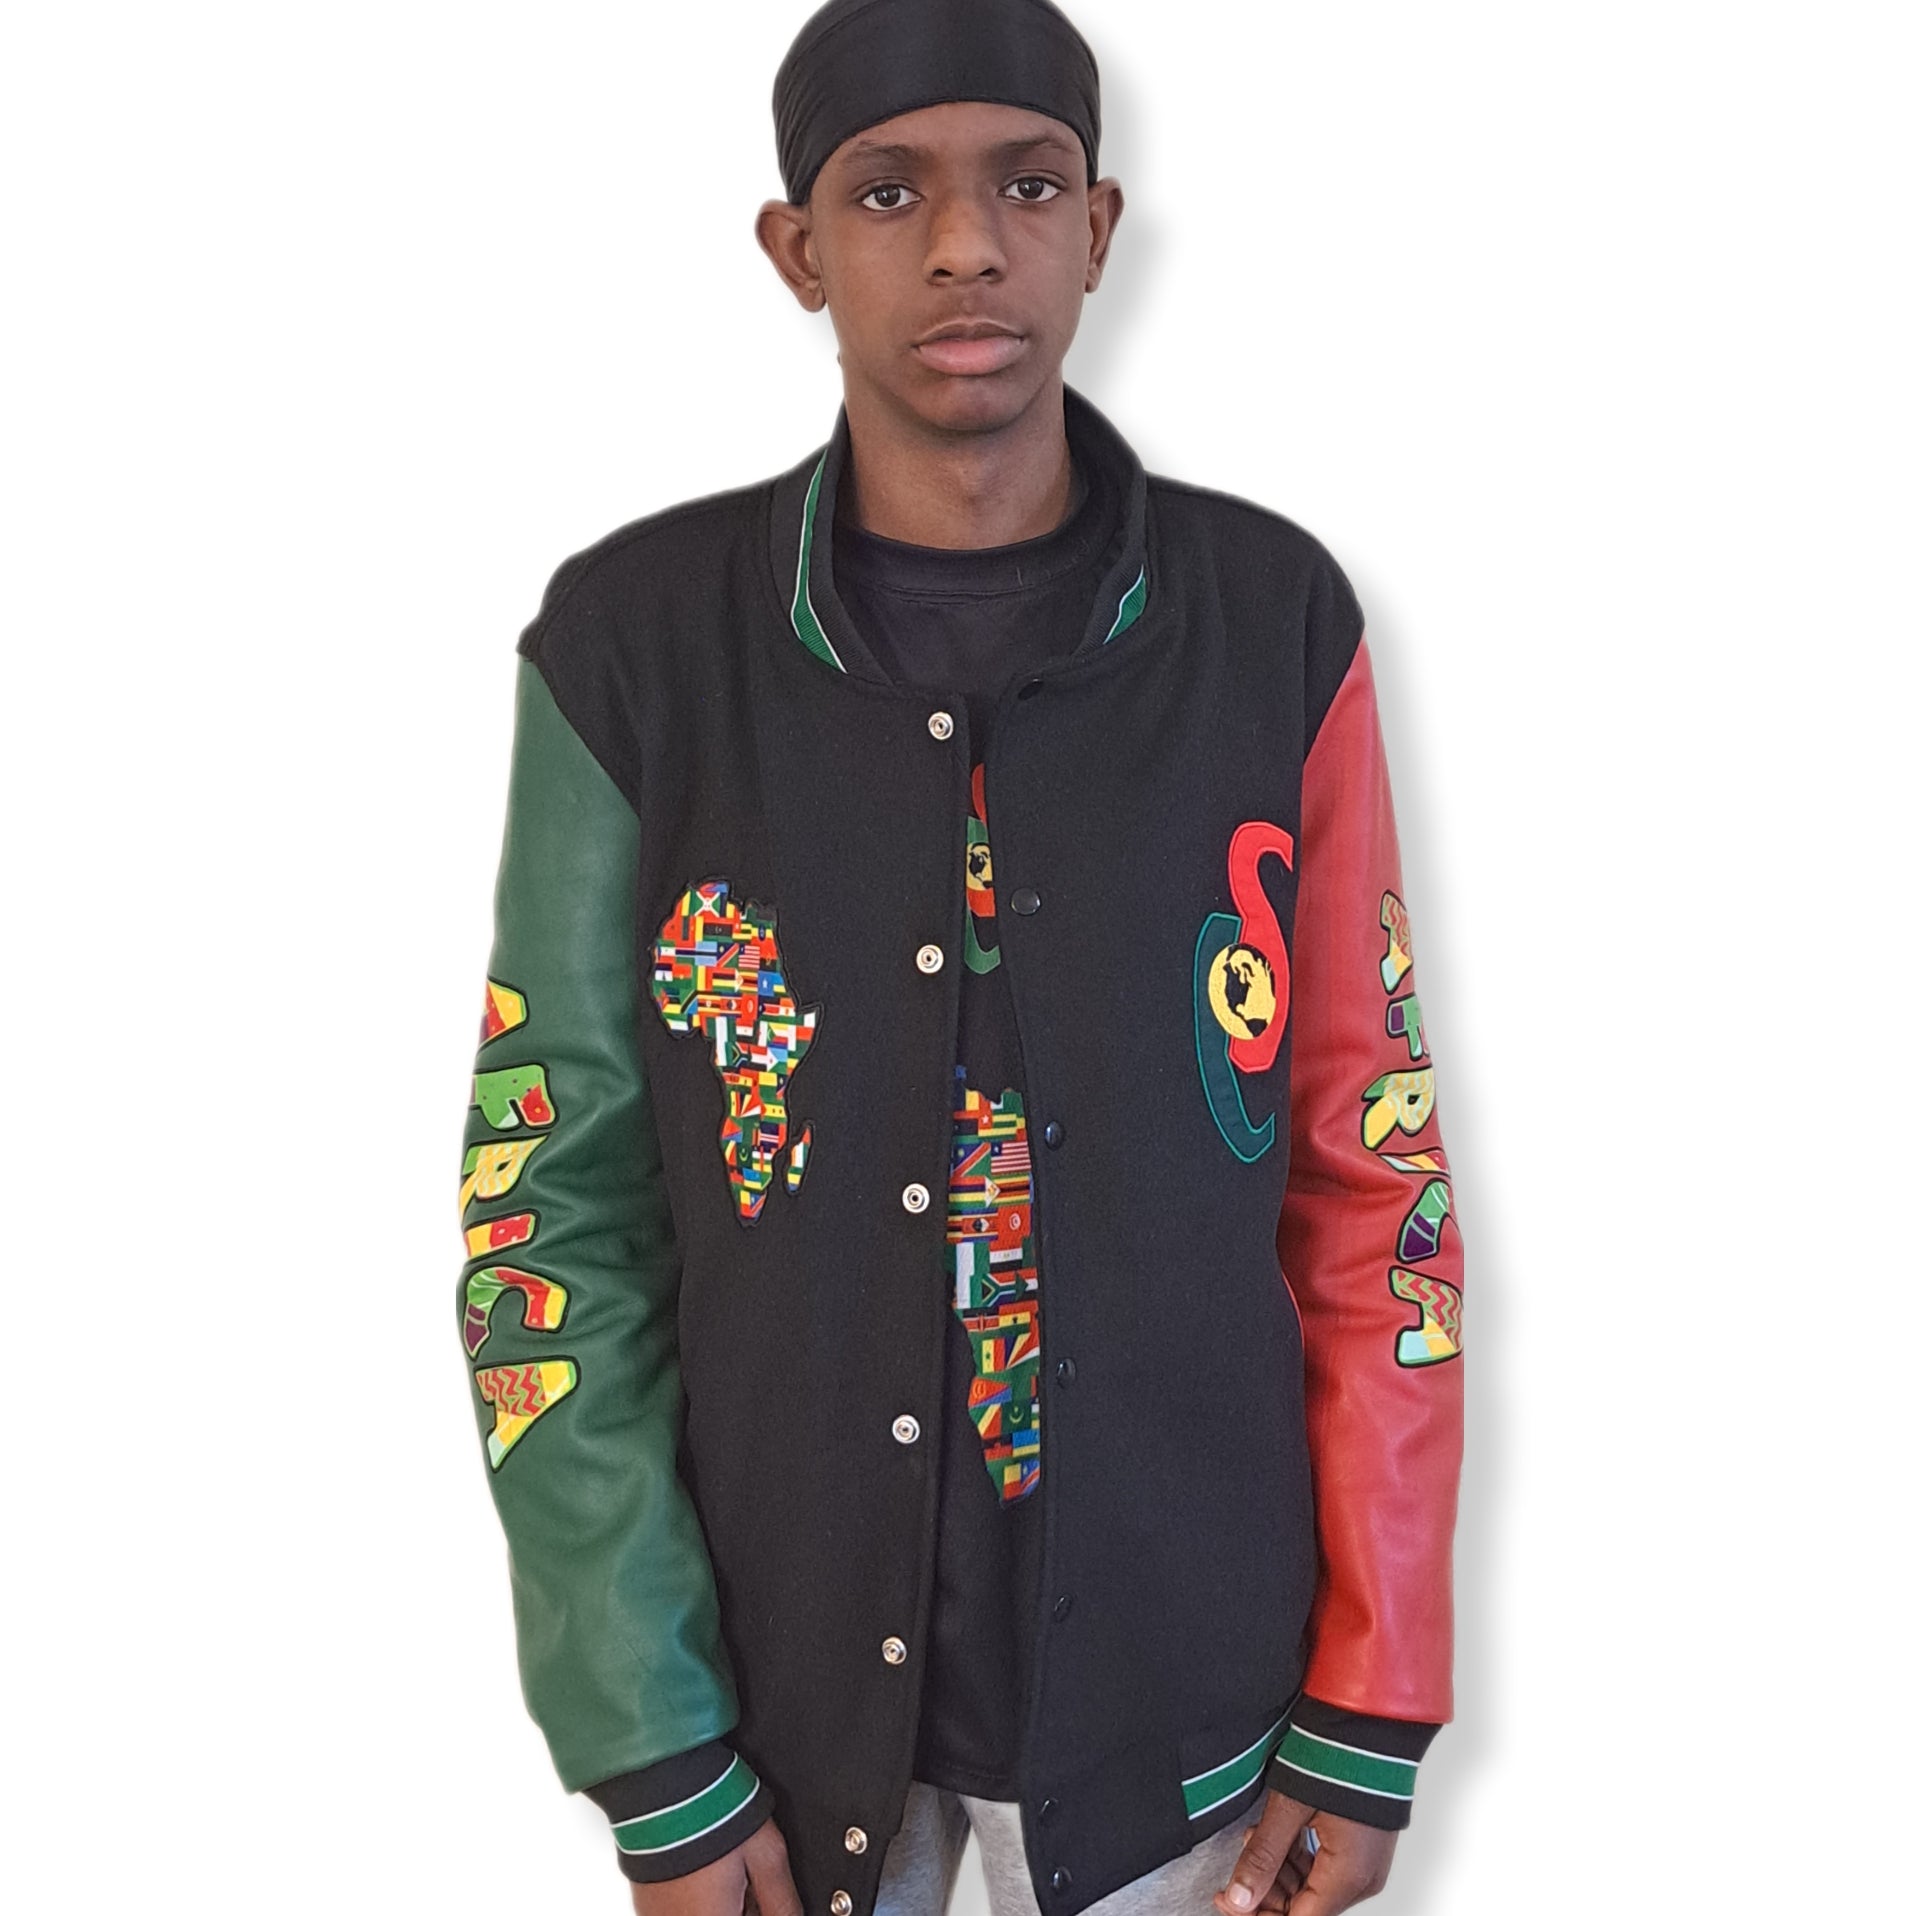 Africa Lettermen's Varsity Jacket. - SPEED OF CHOICE® 